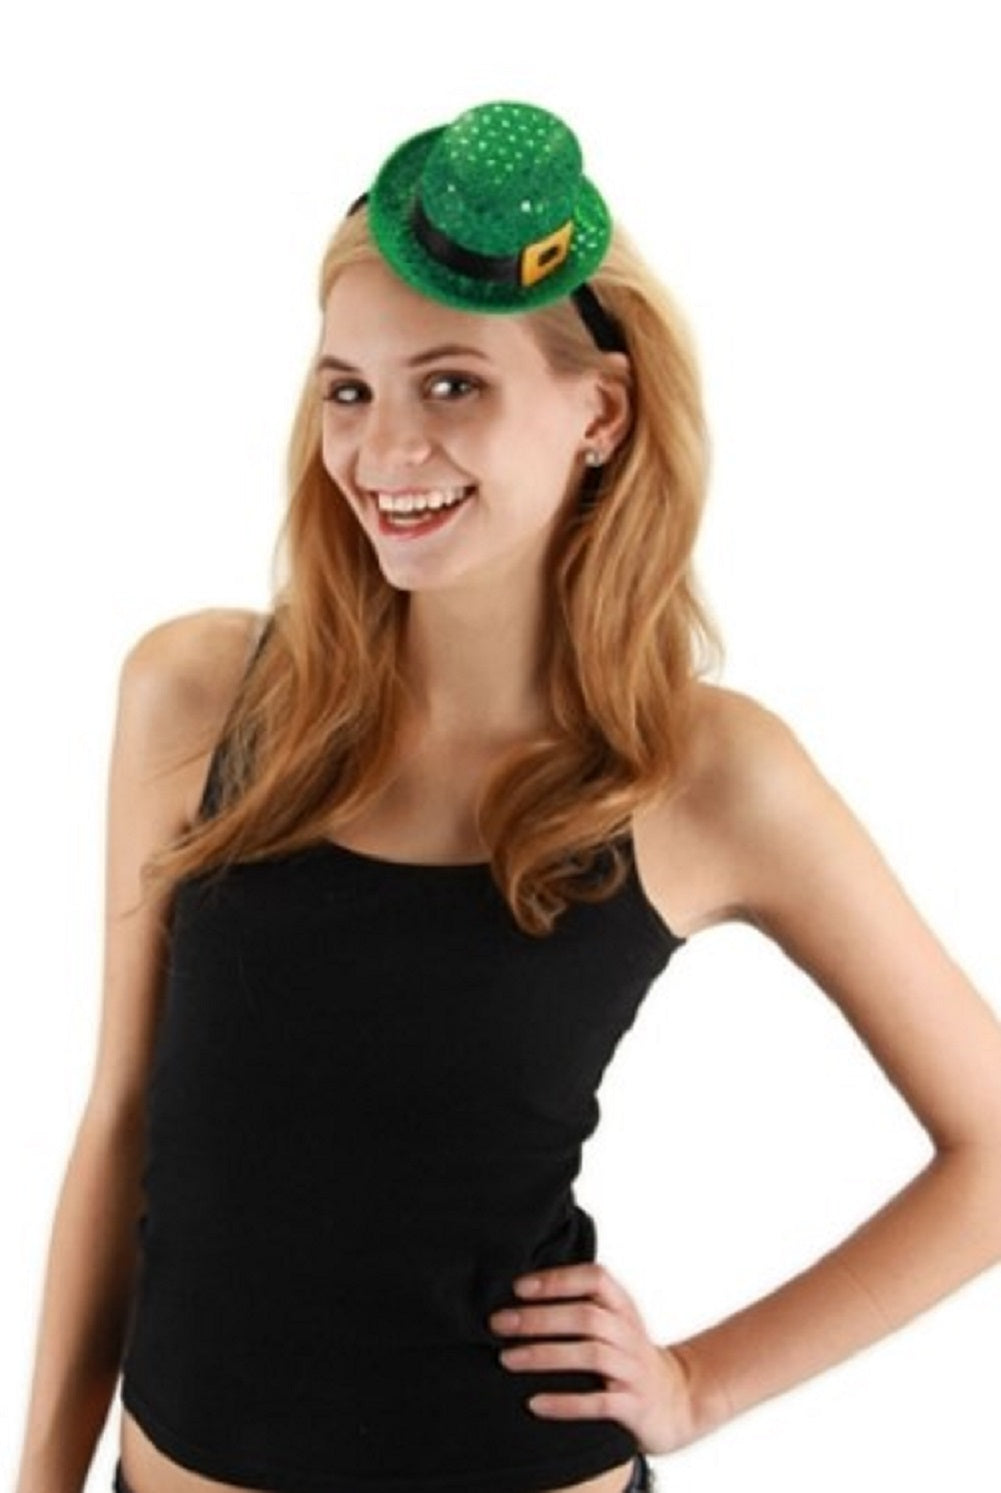 Mini Leprechaun Hat Headband - Green Sequin - Elf - Costume Accessory